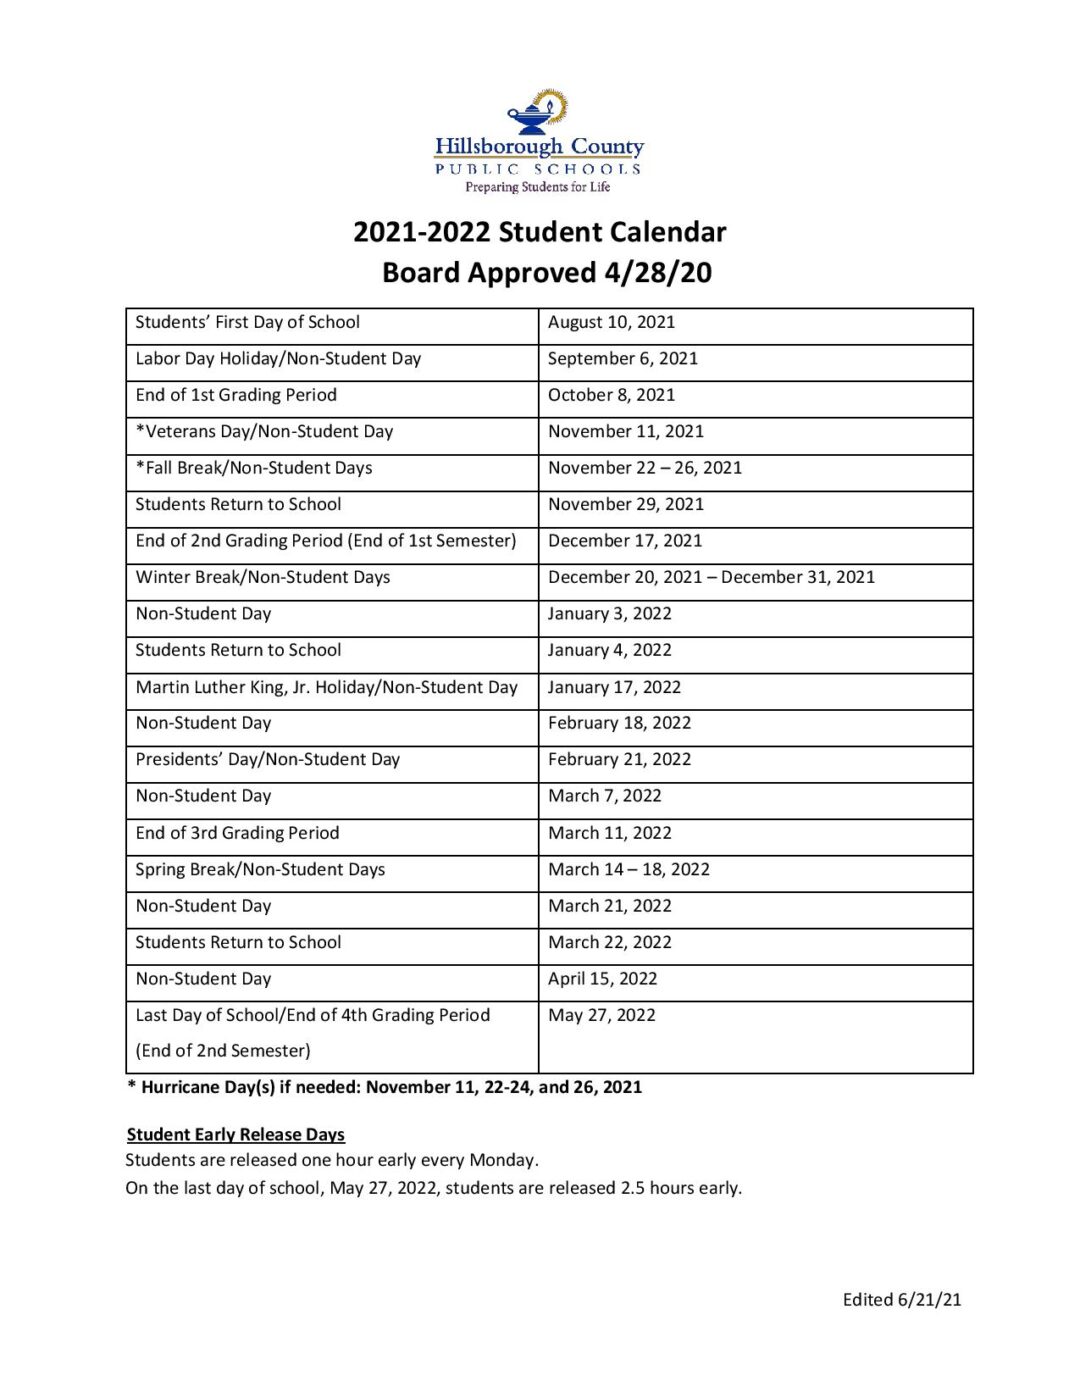 2021-2022-student-calendar-calendar-riset